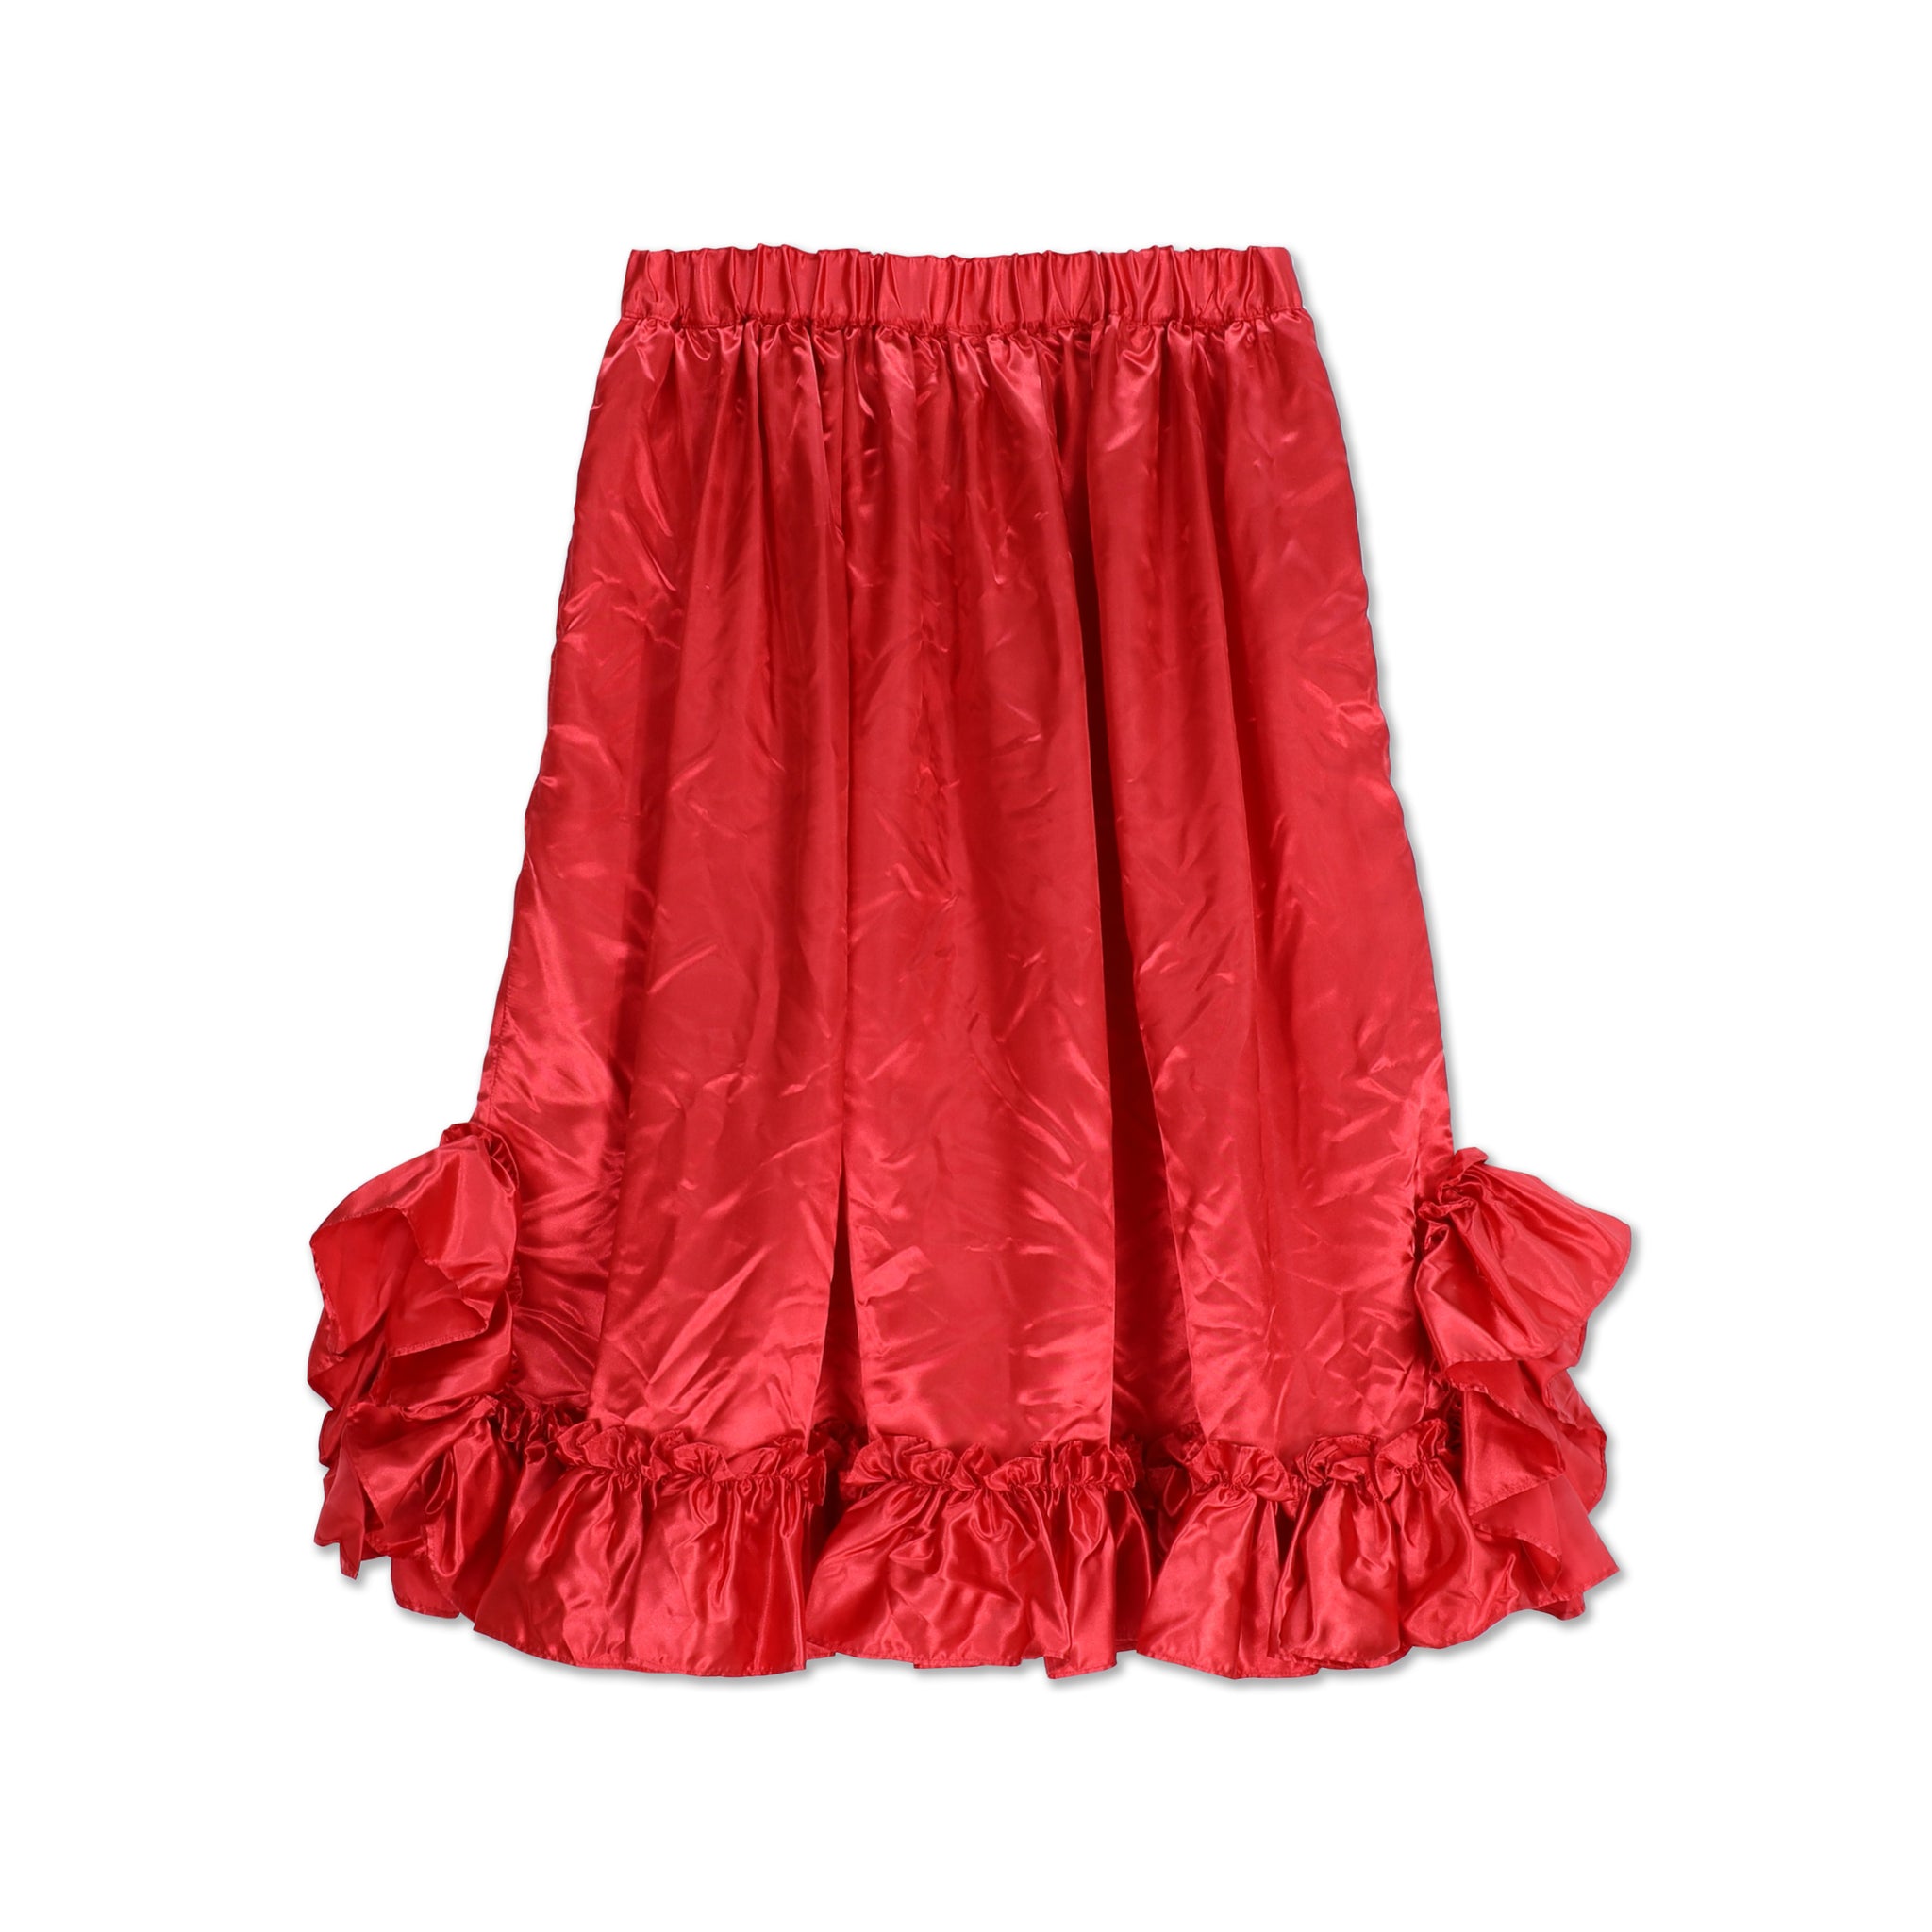 Satin Frill Trim Skirt Red